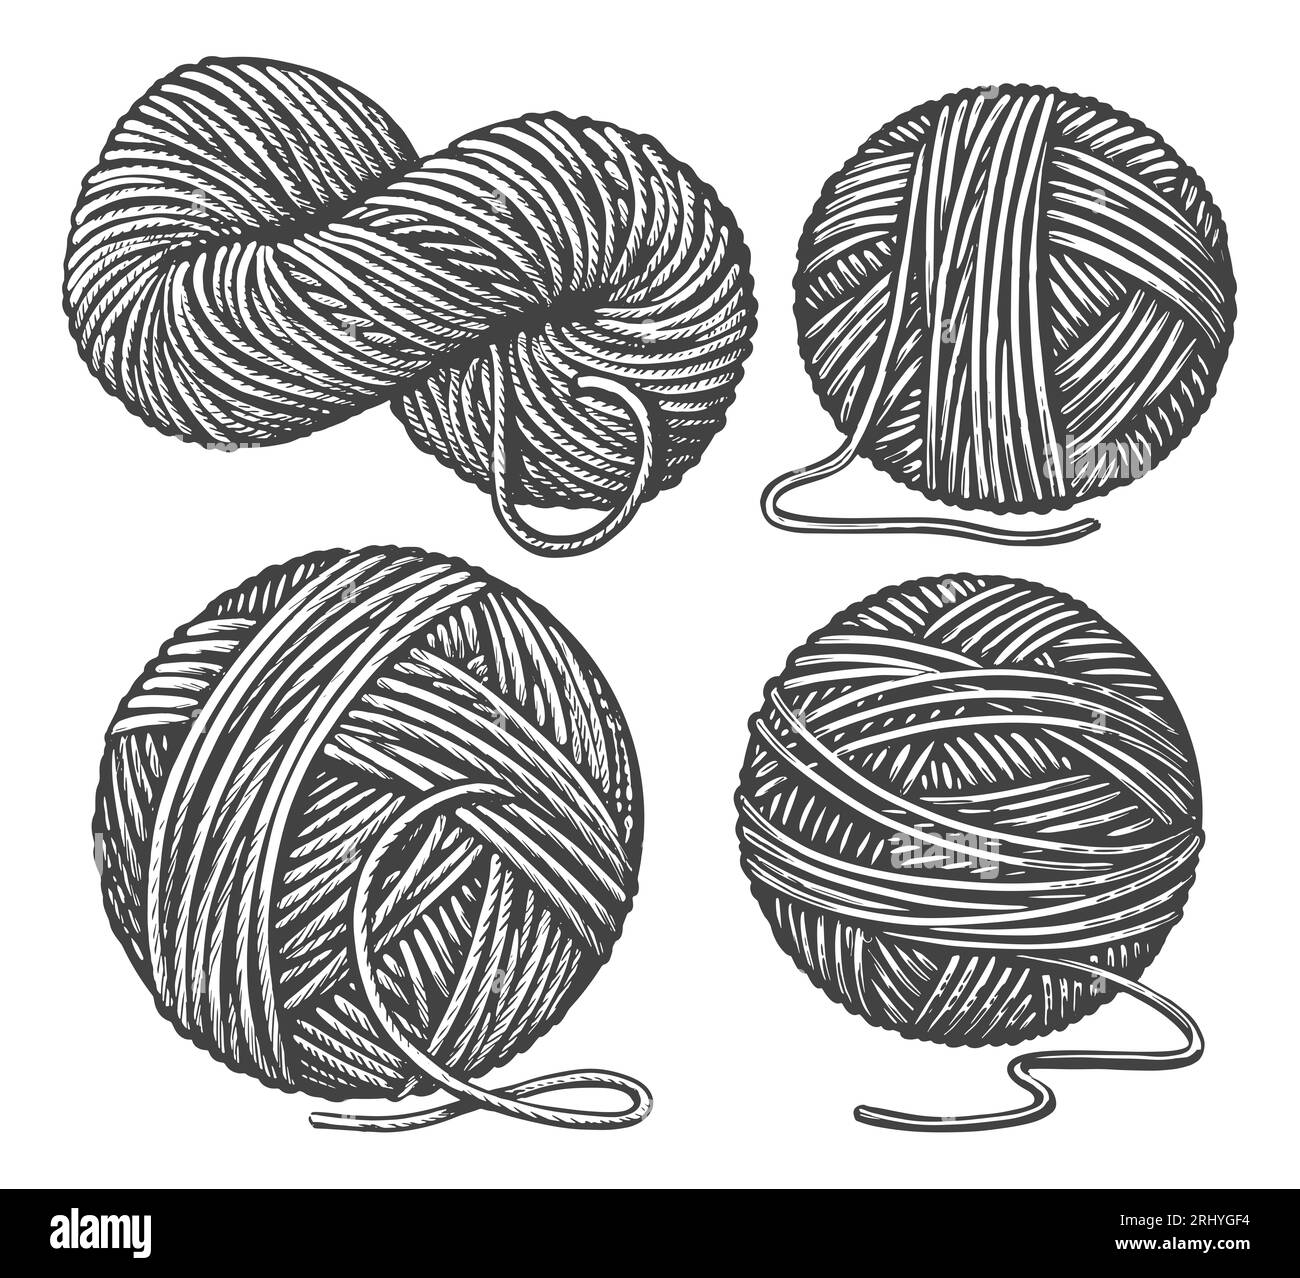 Knitting tools wool yarn isolated on white background Vector sketch  illustration Handmade needlework design elements Stock Vector  Adobe Stock